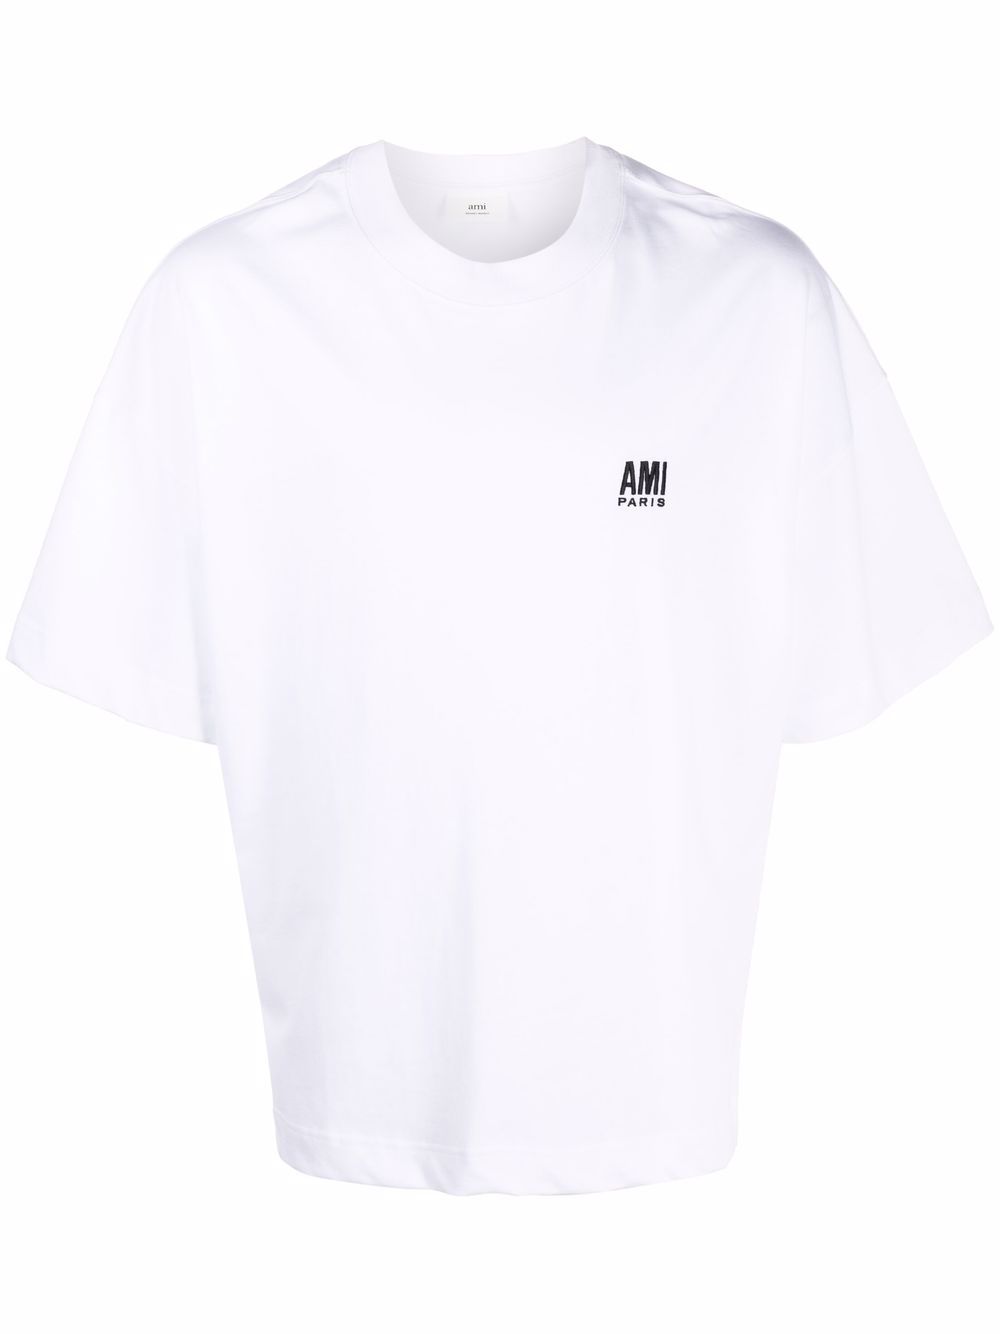 фото Ami paris футболка с вышитым логотипом